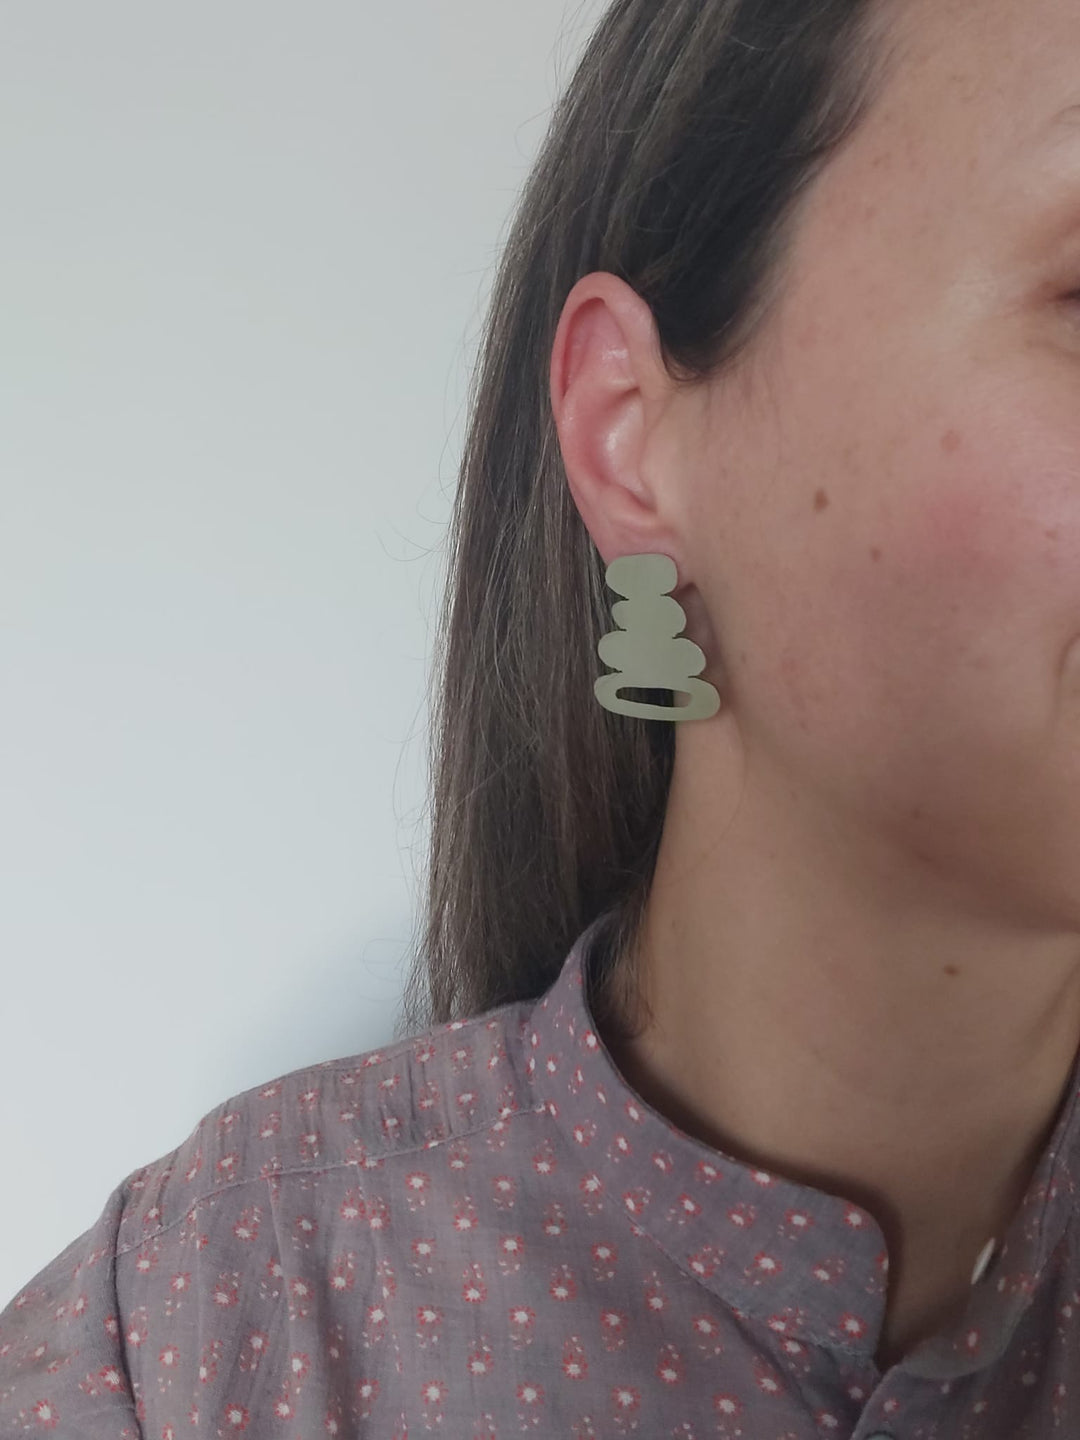 A woman wearing a organic shape earring.